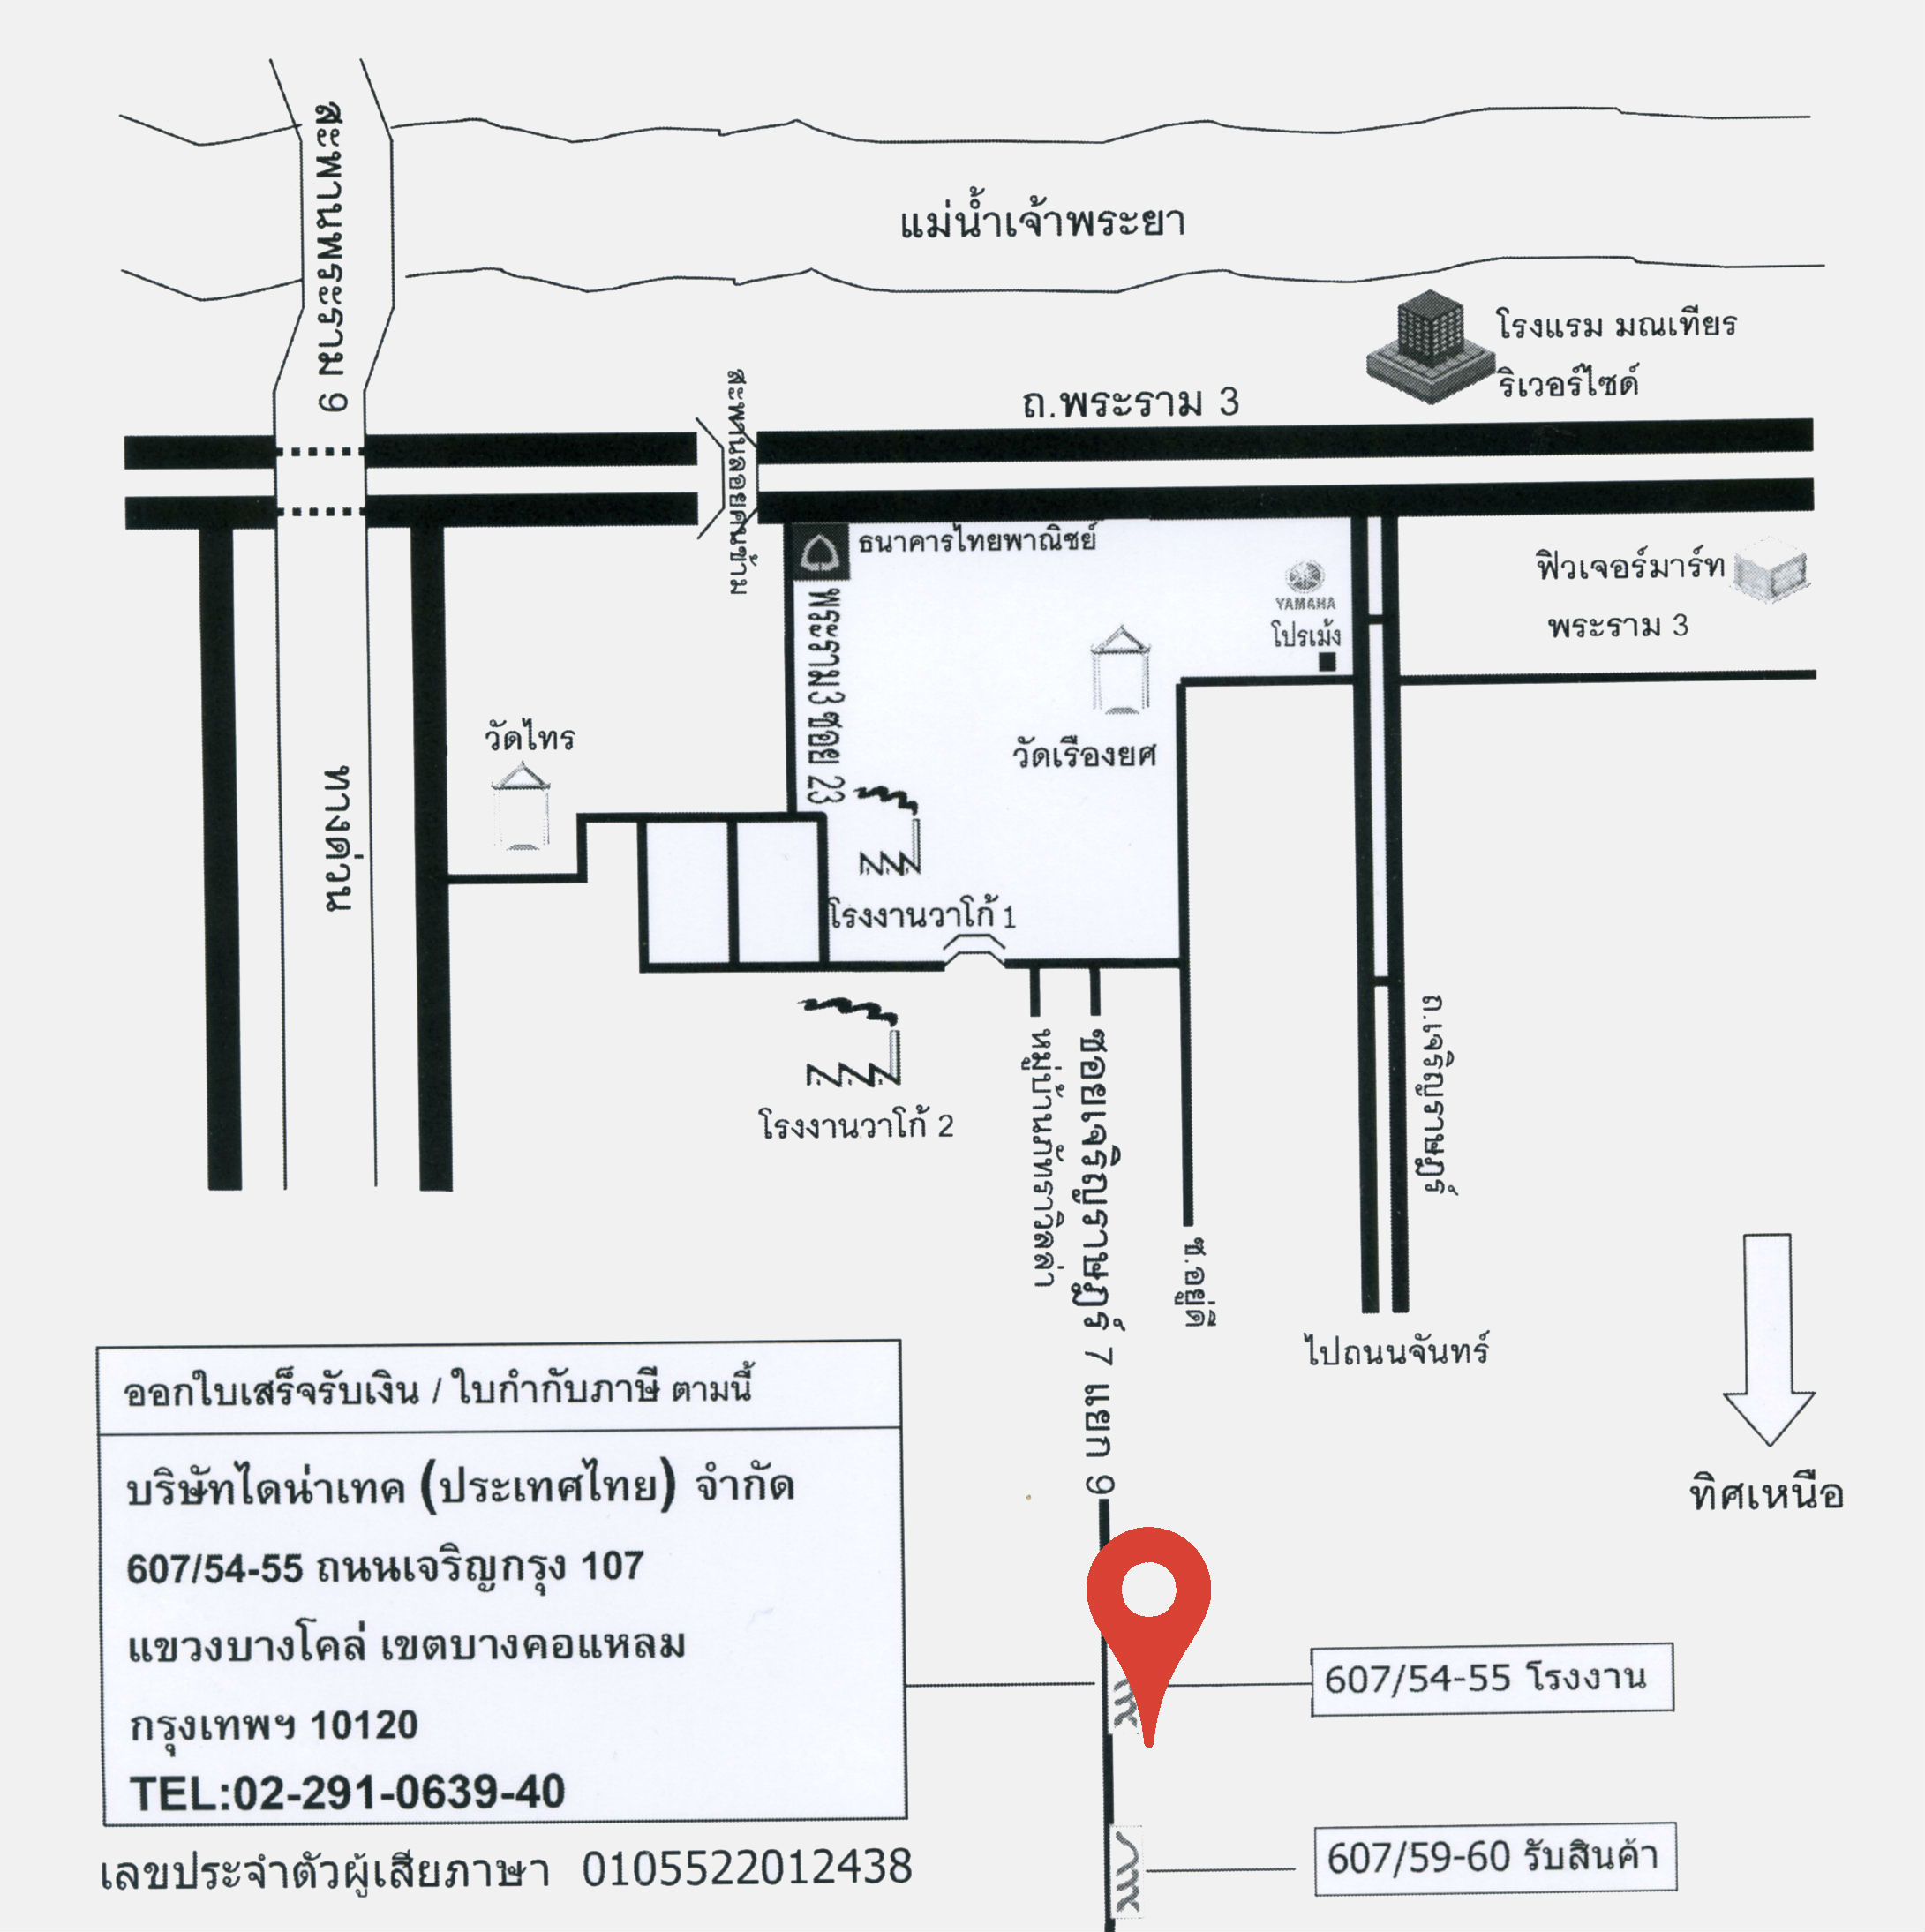 Dynatech (Thailand) Ltd. Maps